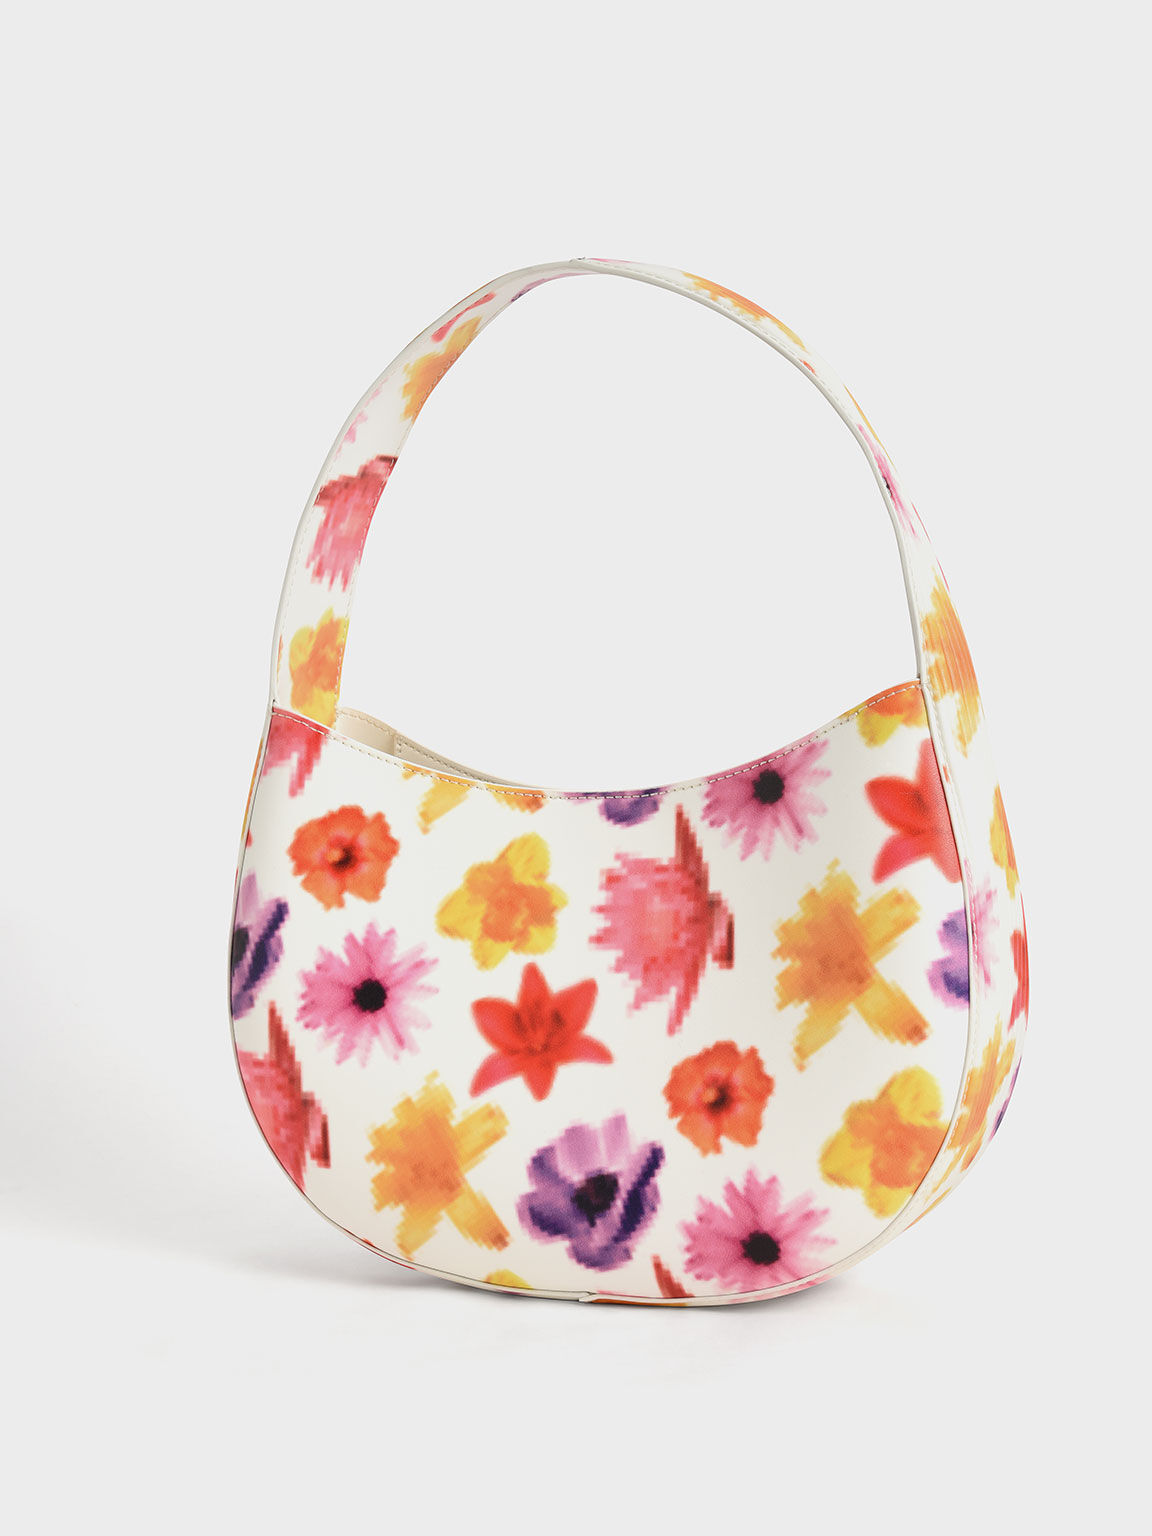 Vera Bradley Silk Ruffled Turquoise Tropical/Floral Print Purse/Handbag -  NWOT | eBay